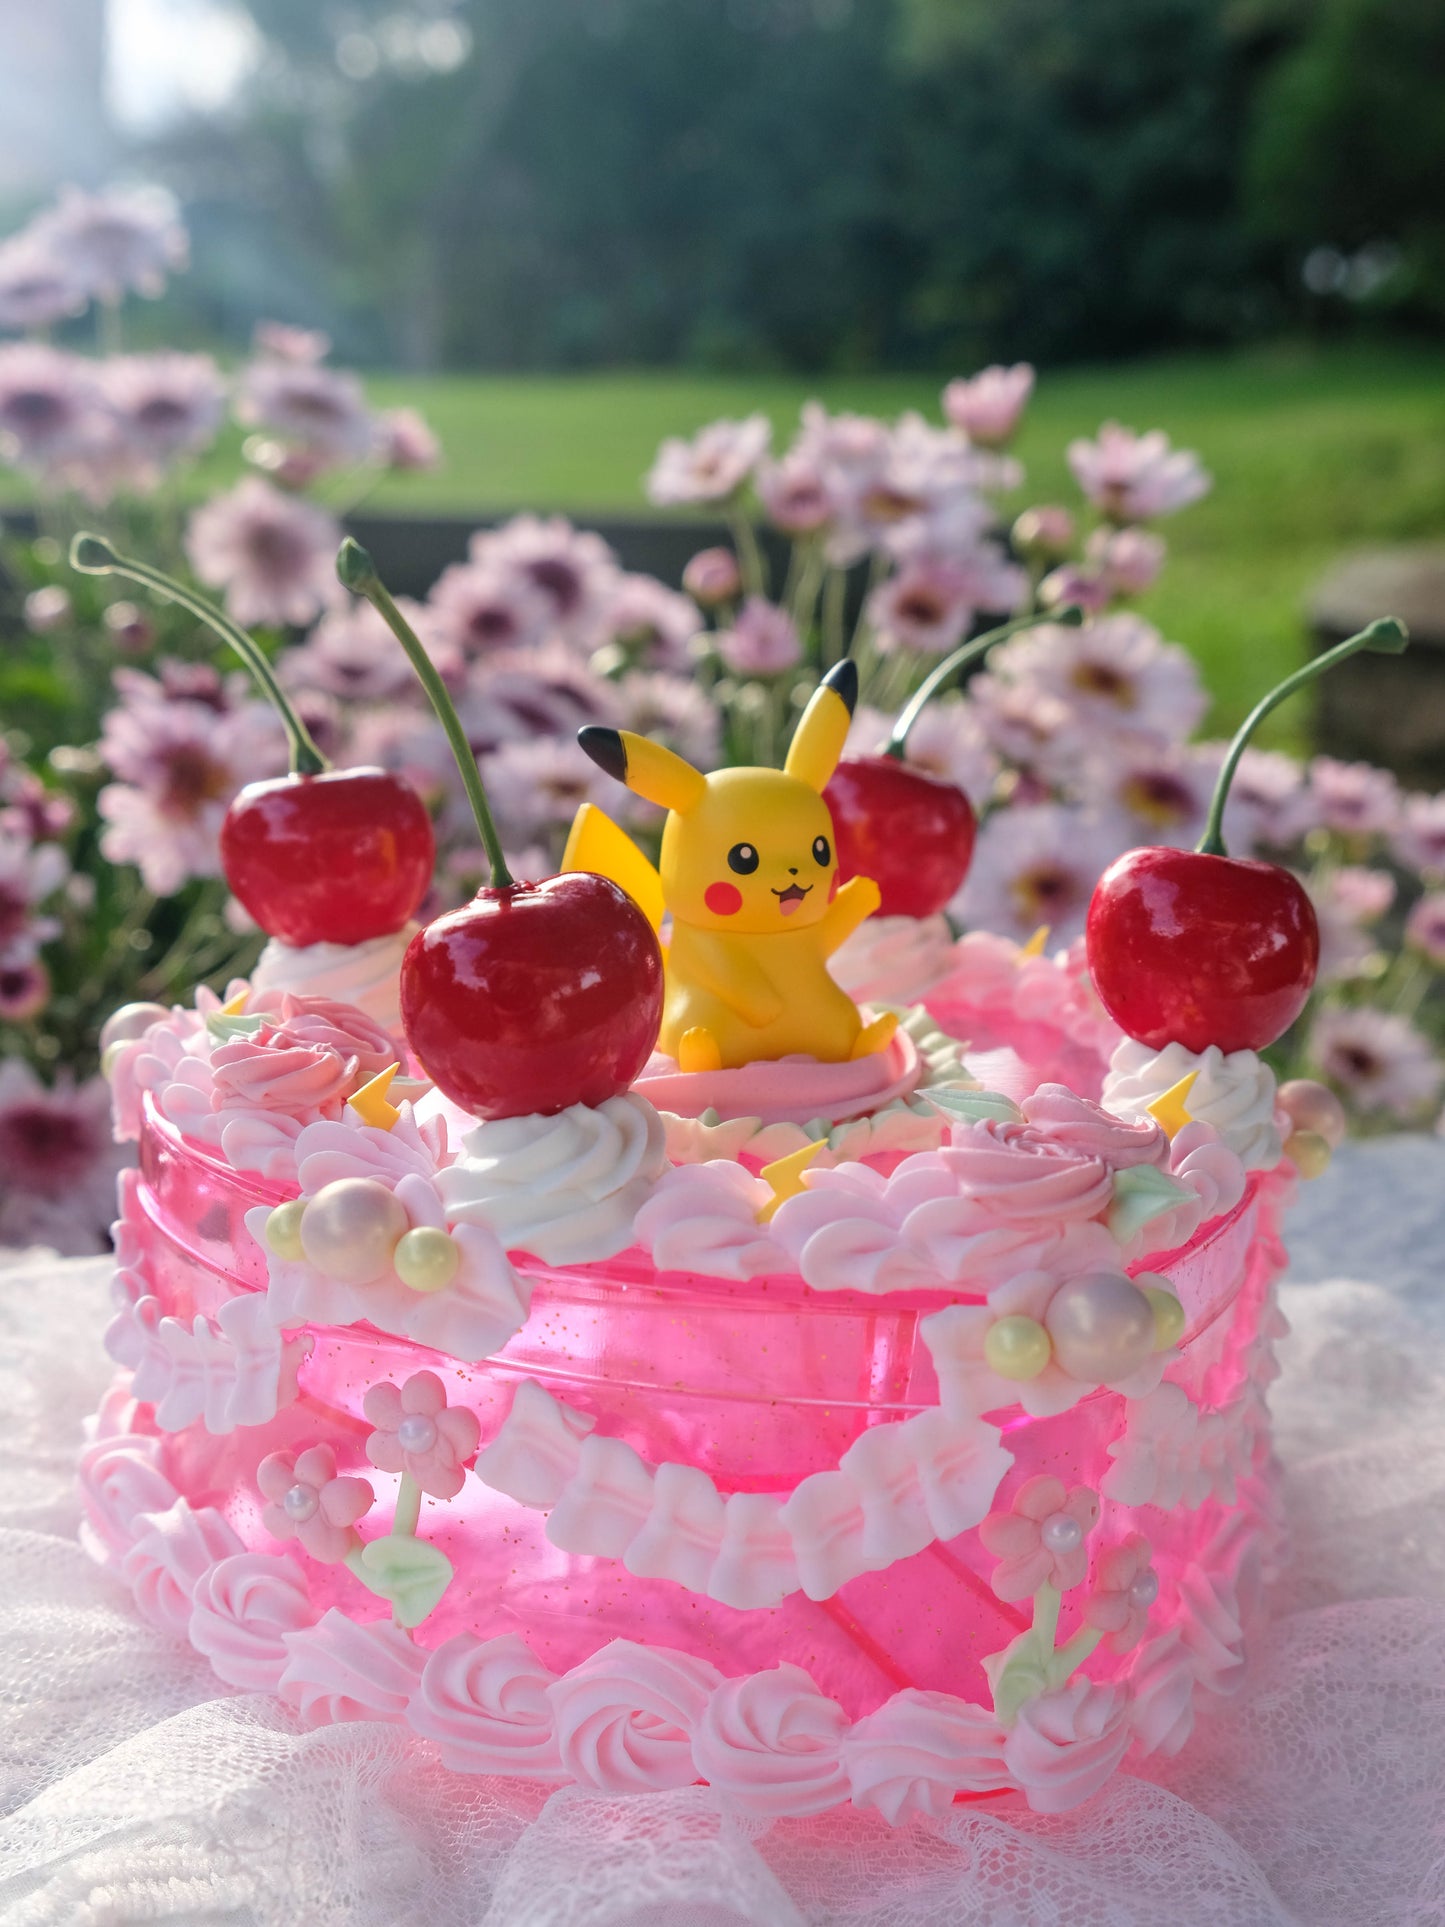 JELLY CAKE - Pikachu I Choose You - Pokemon